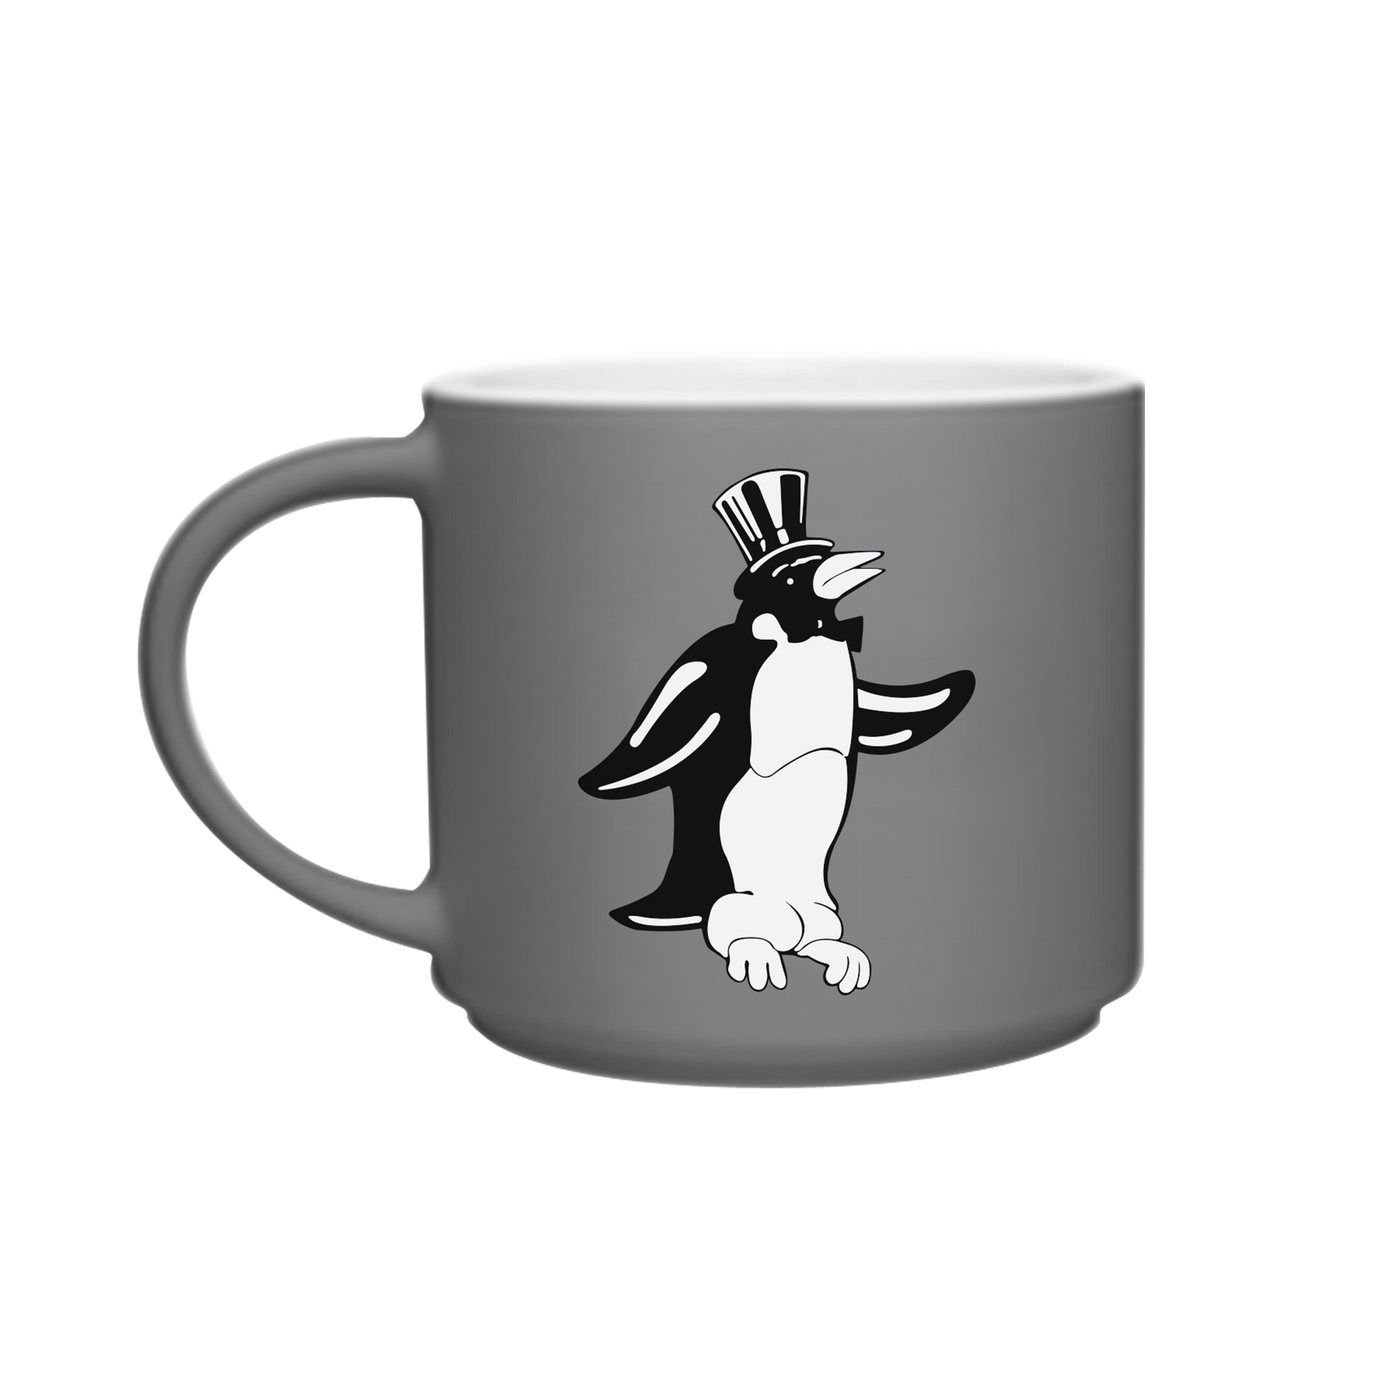 Fleetwood Mac Penguin Mug